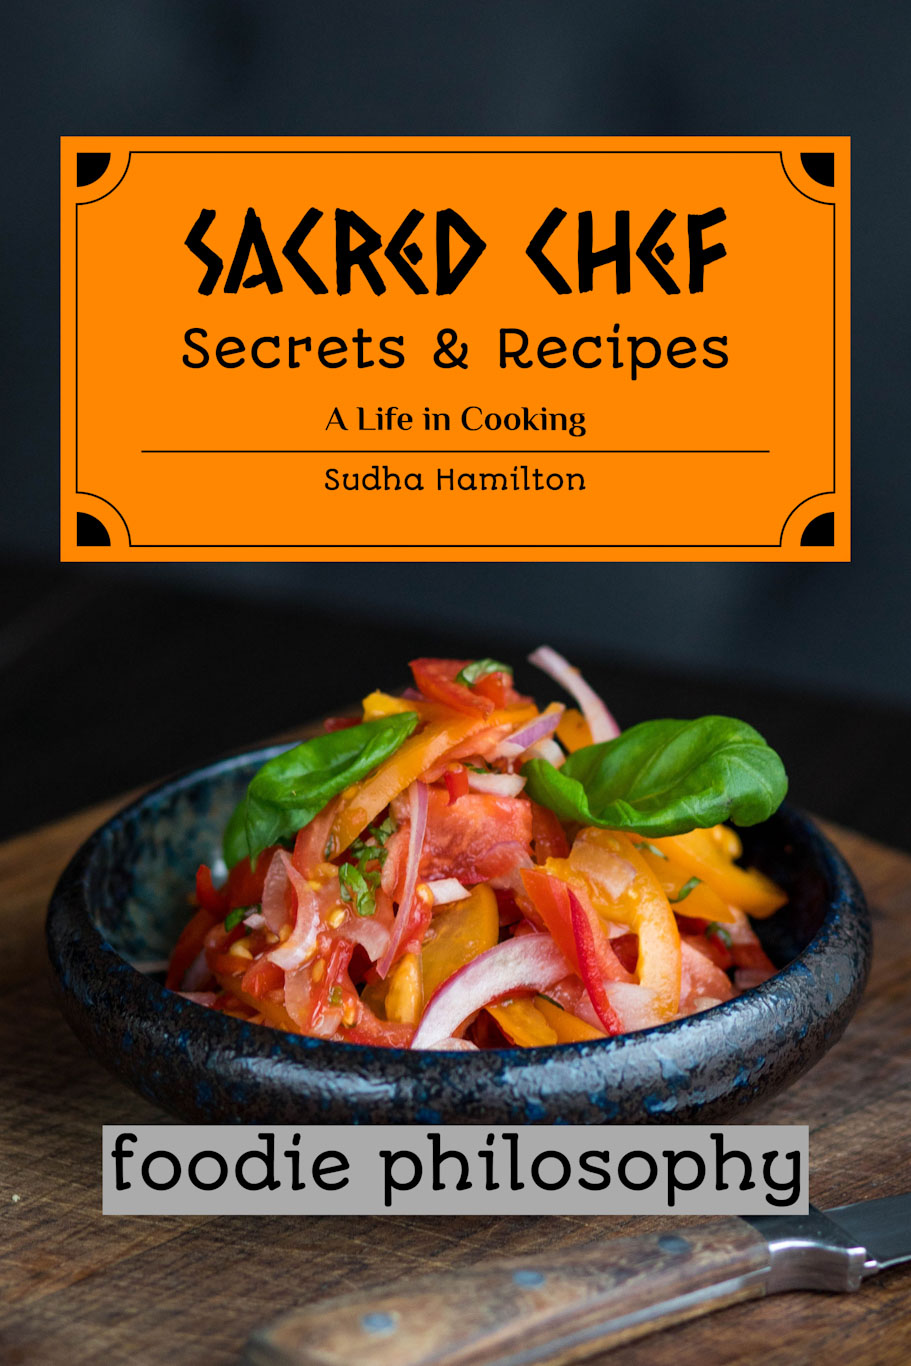 Sacred Chef Secrets & Recipes by Sudha Hamilton